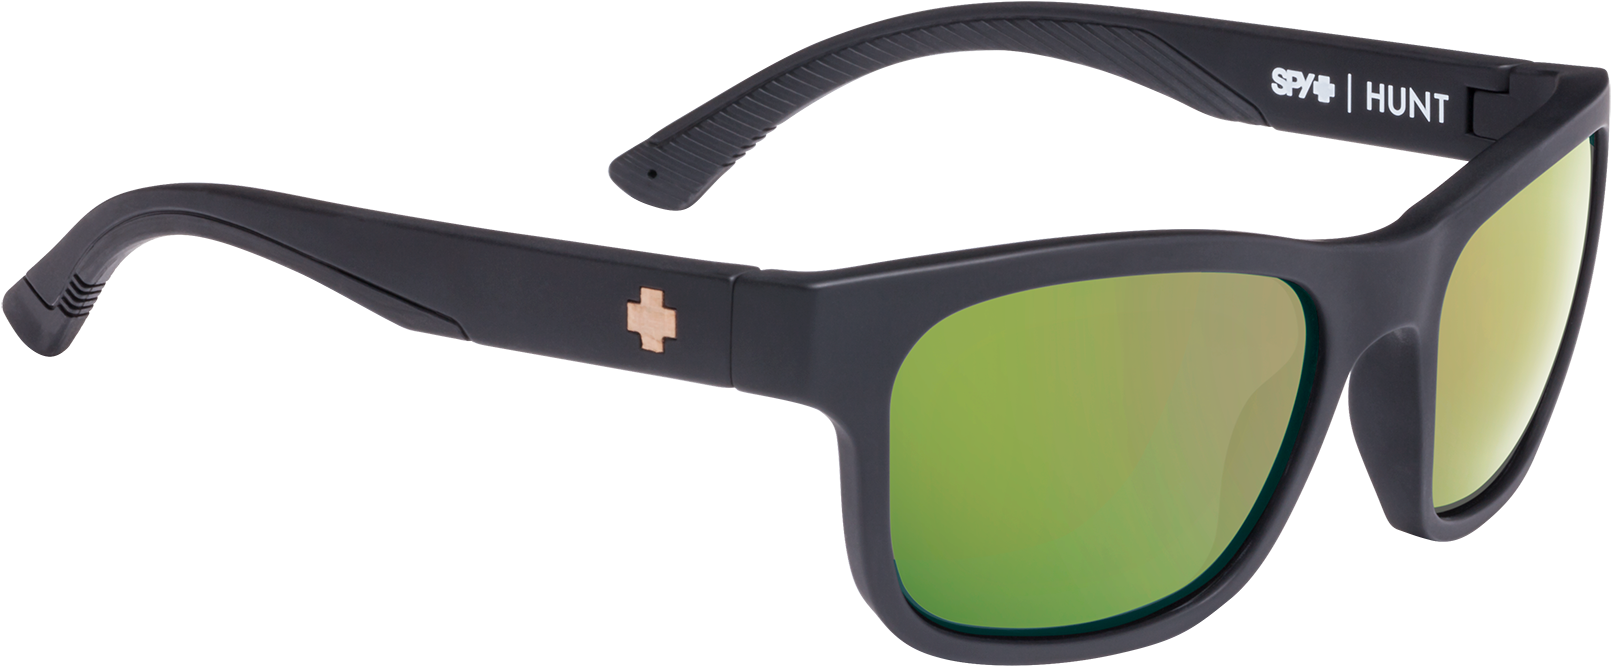 Black Sunglasses Green Lenses PNG image